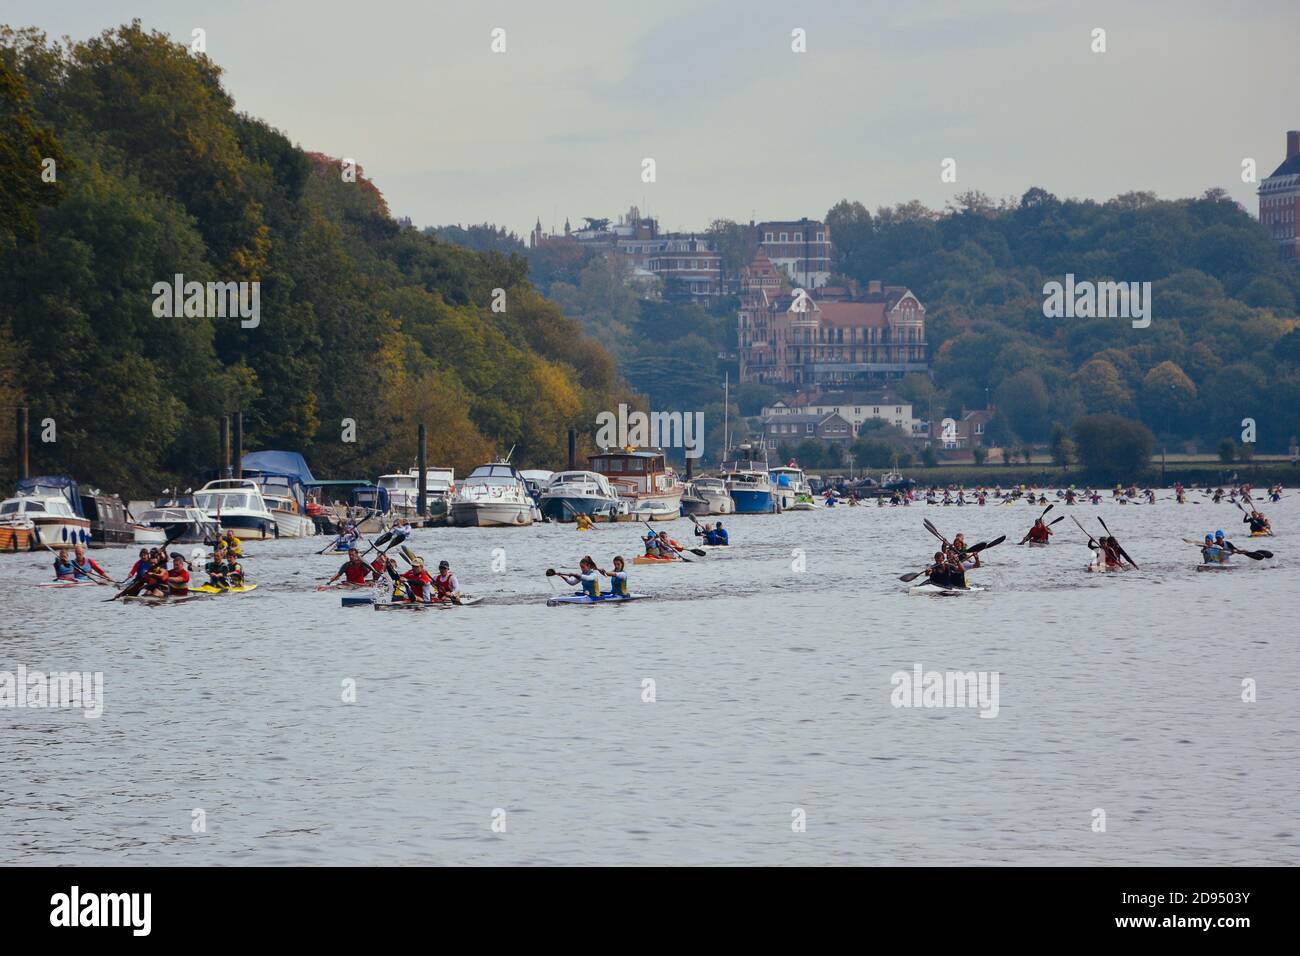 RICHMOND, UNITED KINGDOM - Oct 19, 2020: Photos from the Hasler Final Marathon Kayaking Canoeing National Championships in Richmond, UK. Stock Photo